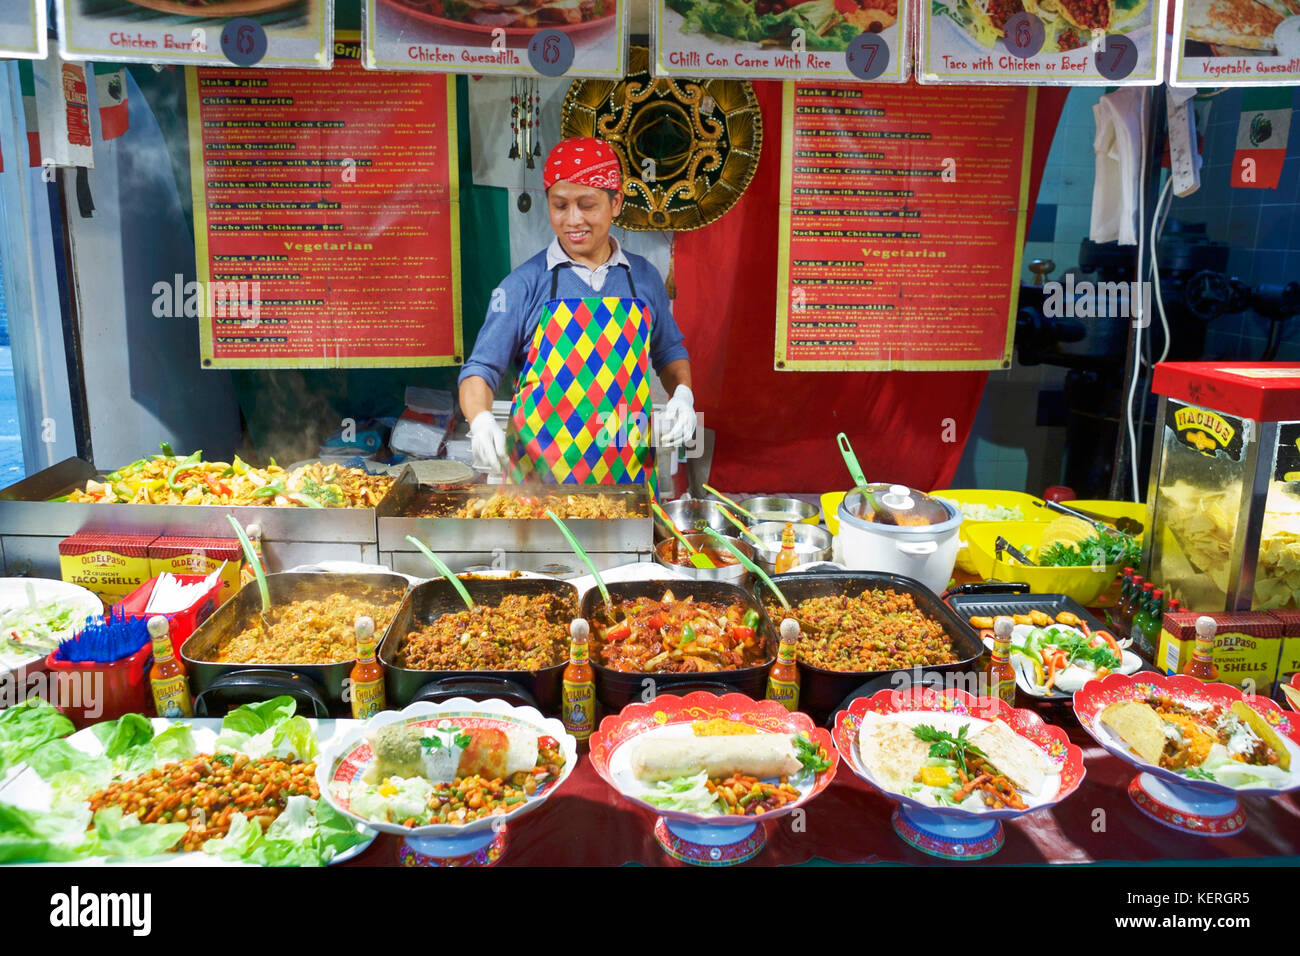 London Bricklane. Street Food Stall Vendor, der mexikanisches Essen verkauft. Street Food UK. Street Food London. London Brick Lane Stockfoto